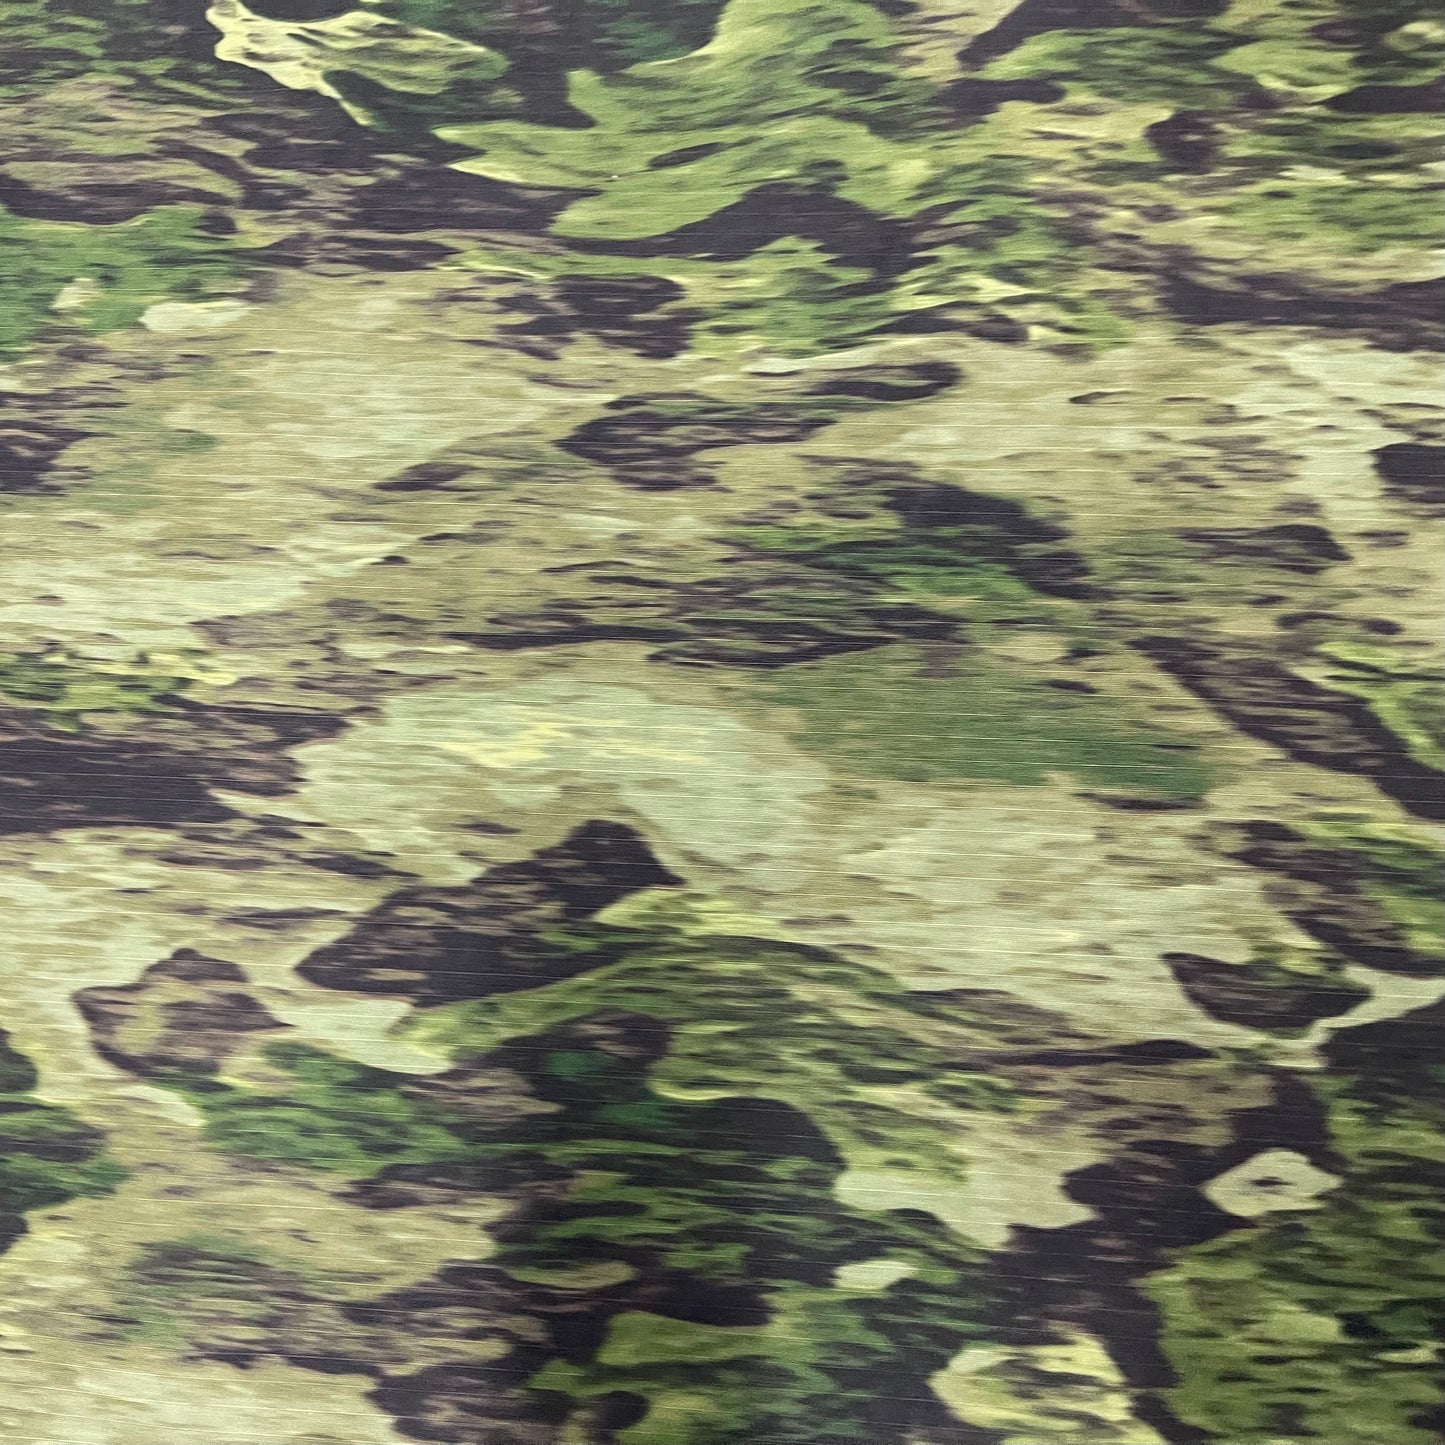 50/50 Nylon/Cotton Camouflage Ripstop Fabric - ATACS FG-X Camo (Sold per Yard)